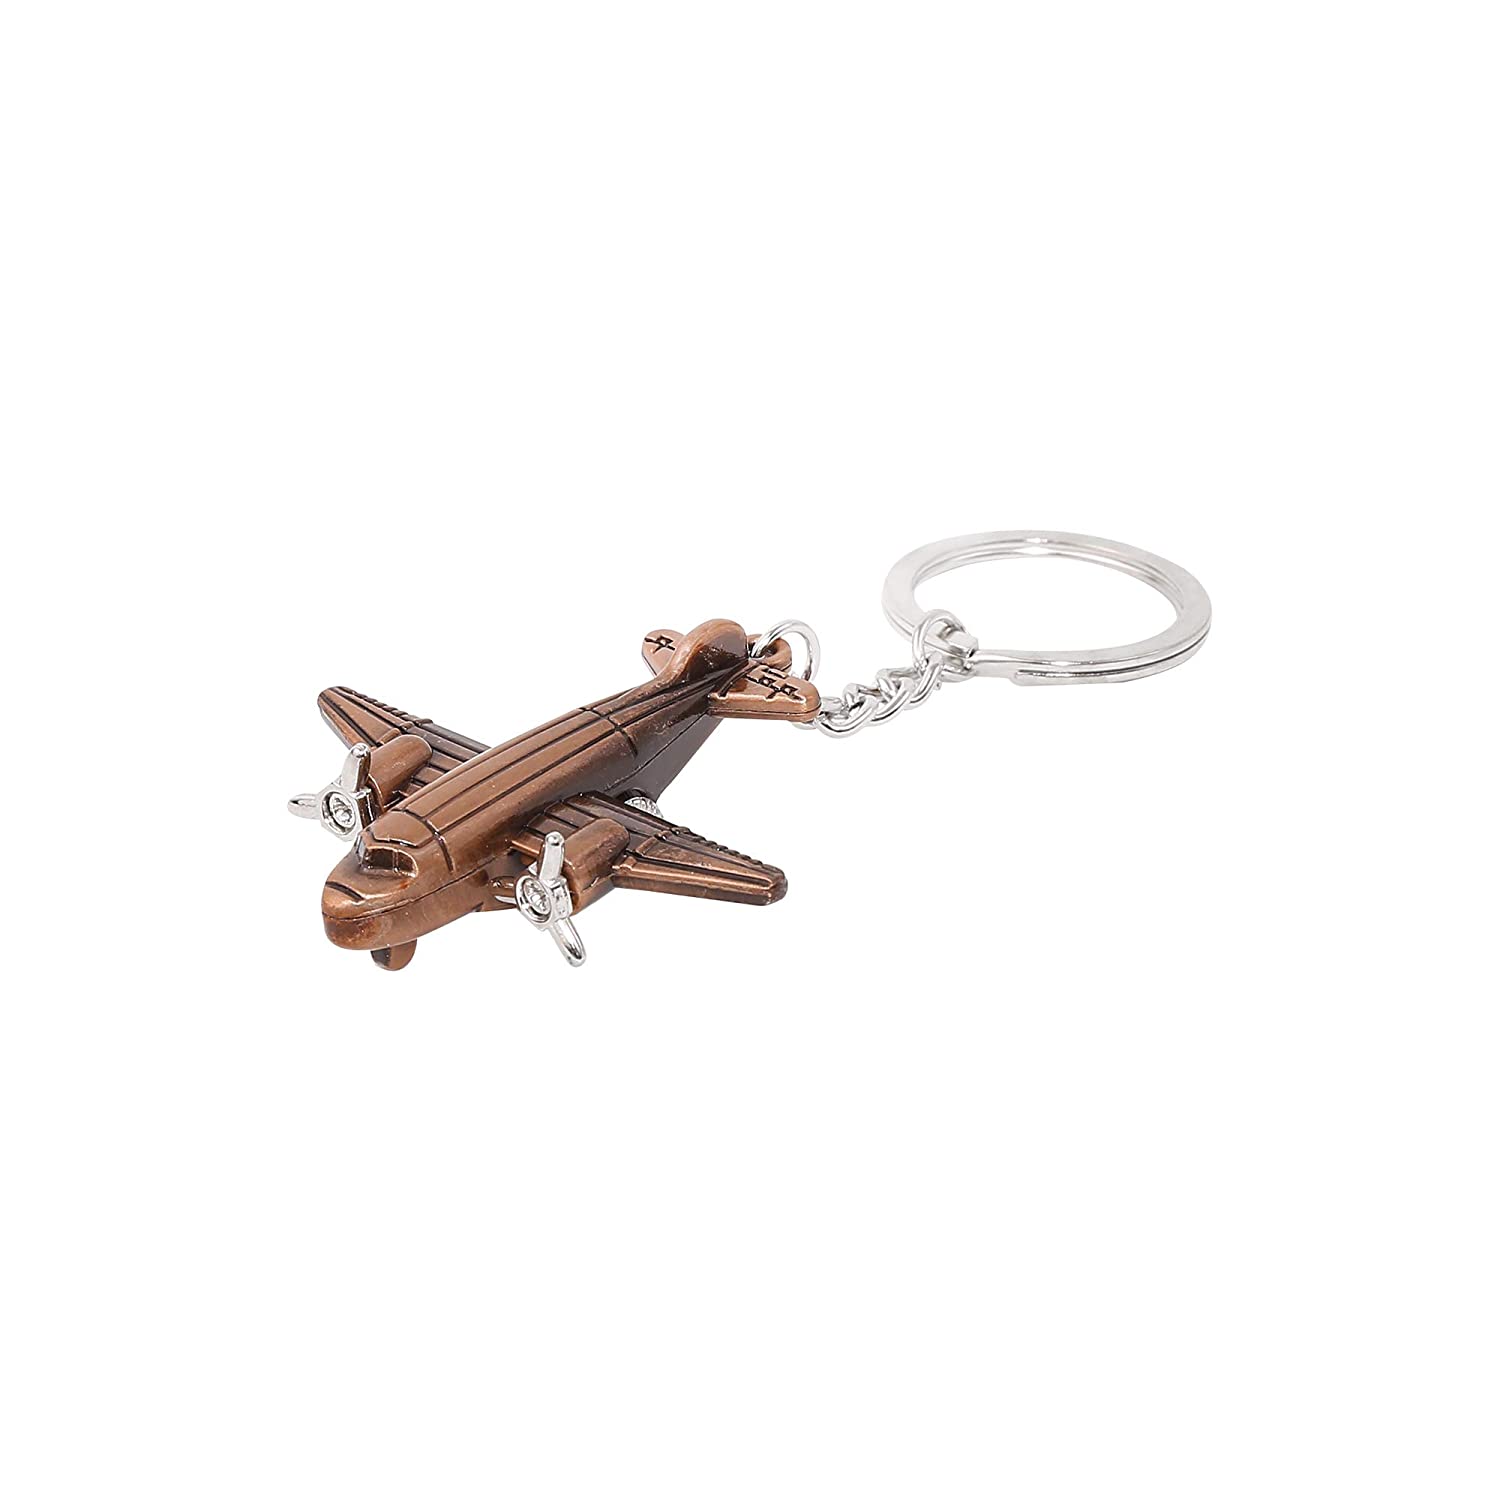 Airplane Metal Brown Key Chain